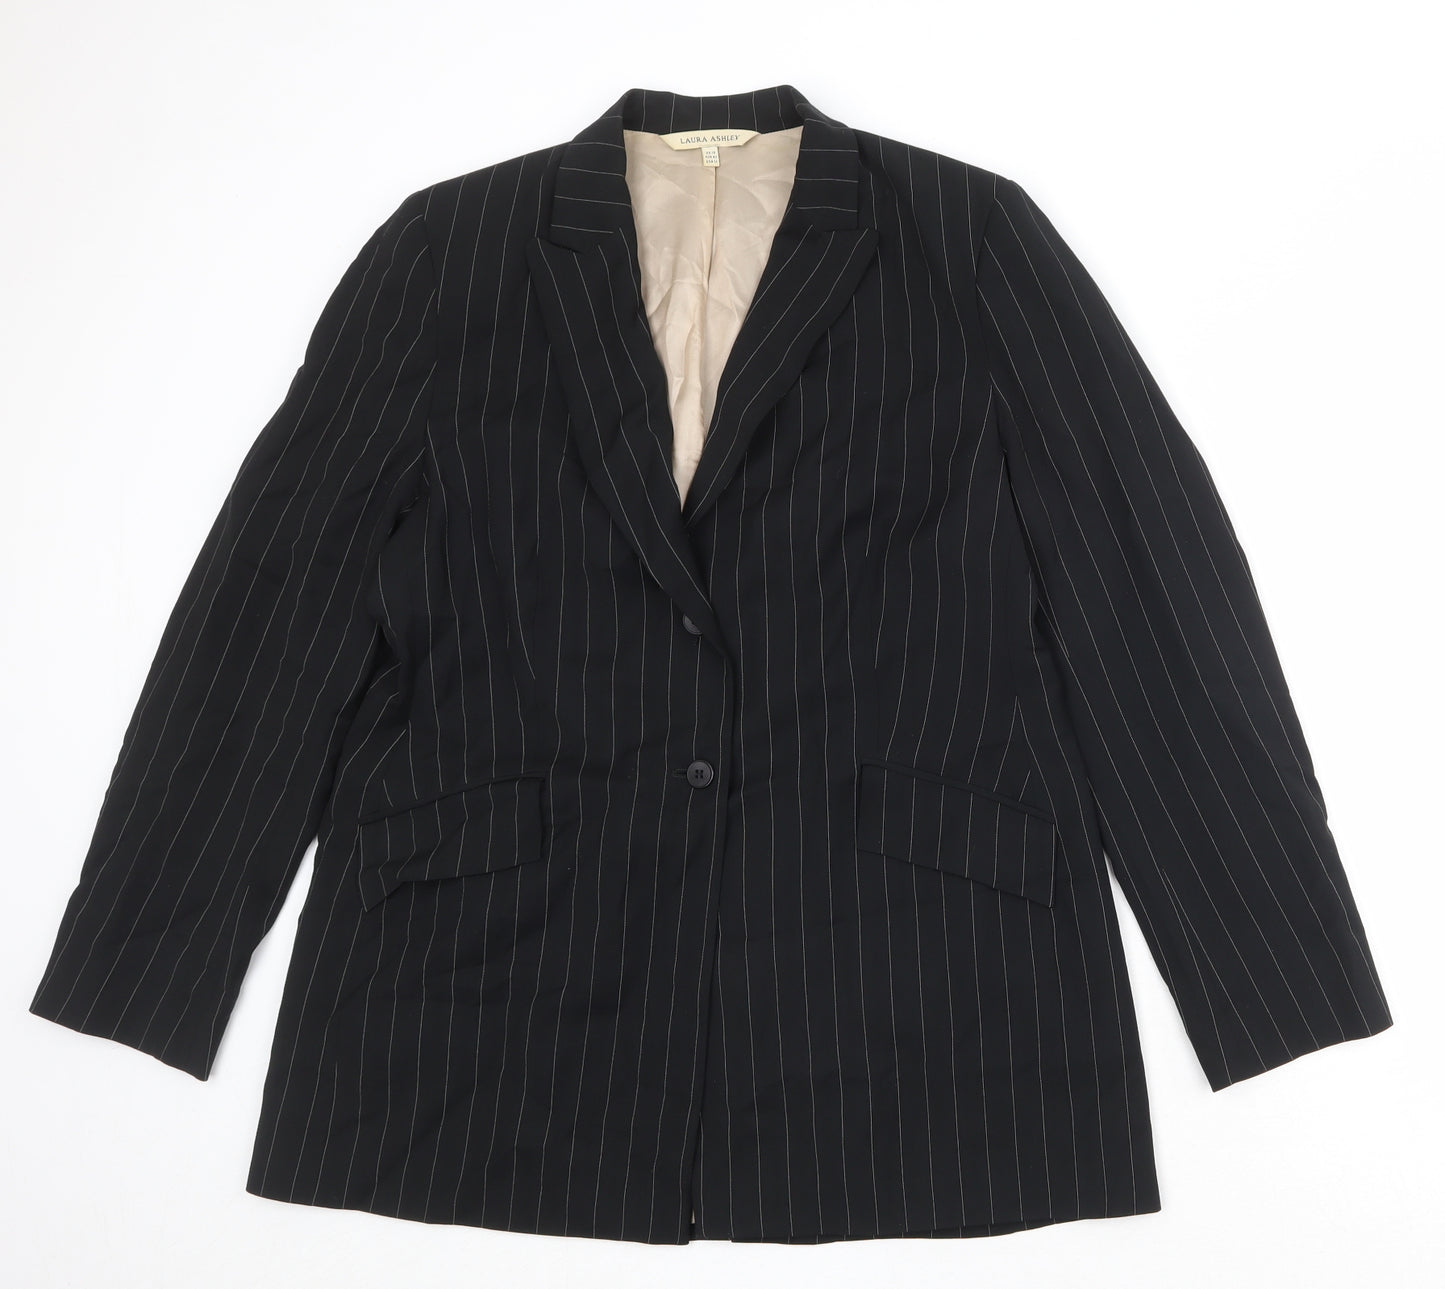 Laura Ashley Womens Black Striped Wool Jacket Suit Jacket Size 16